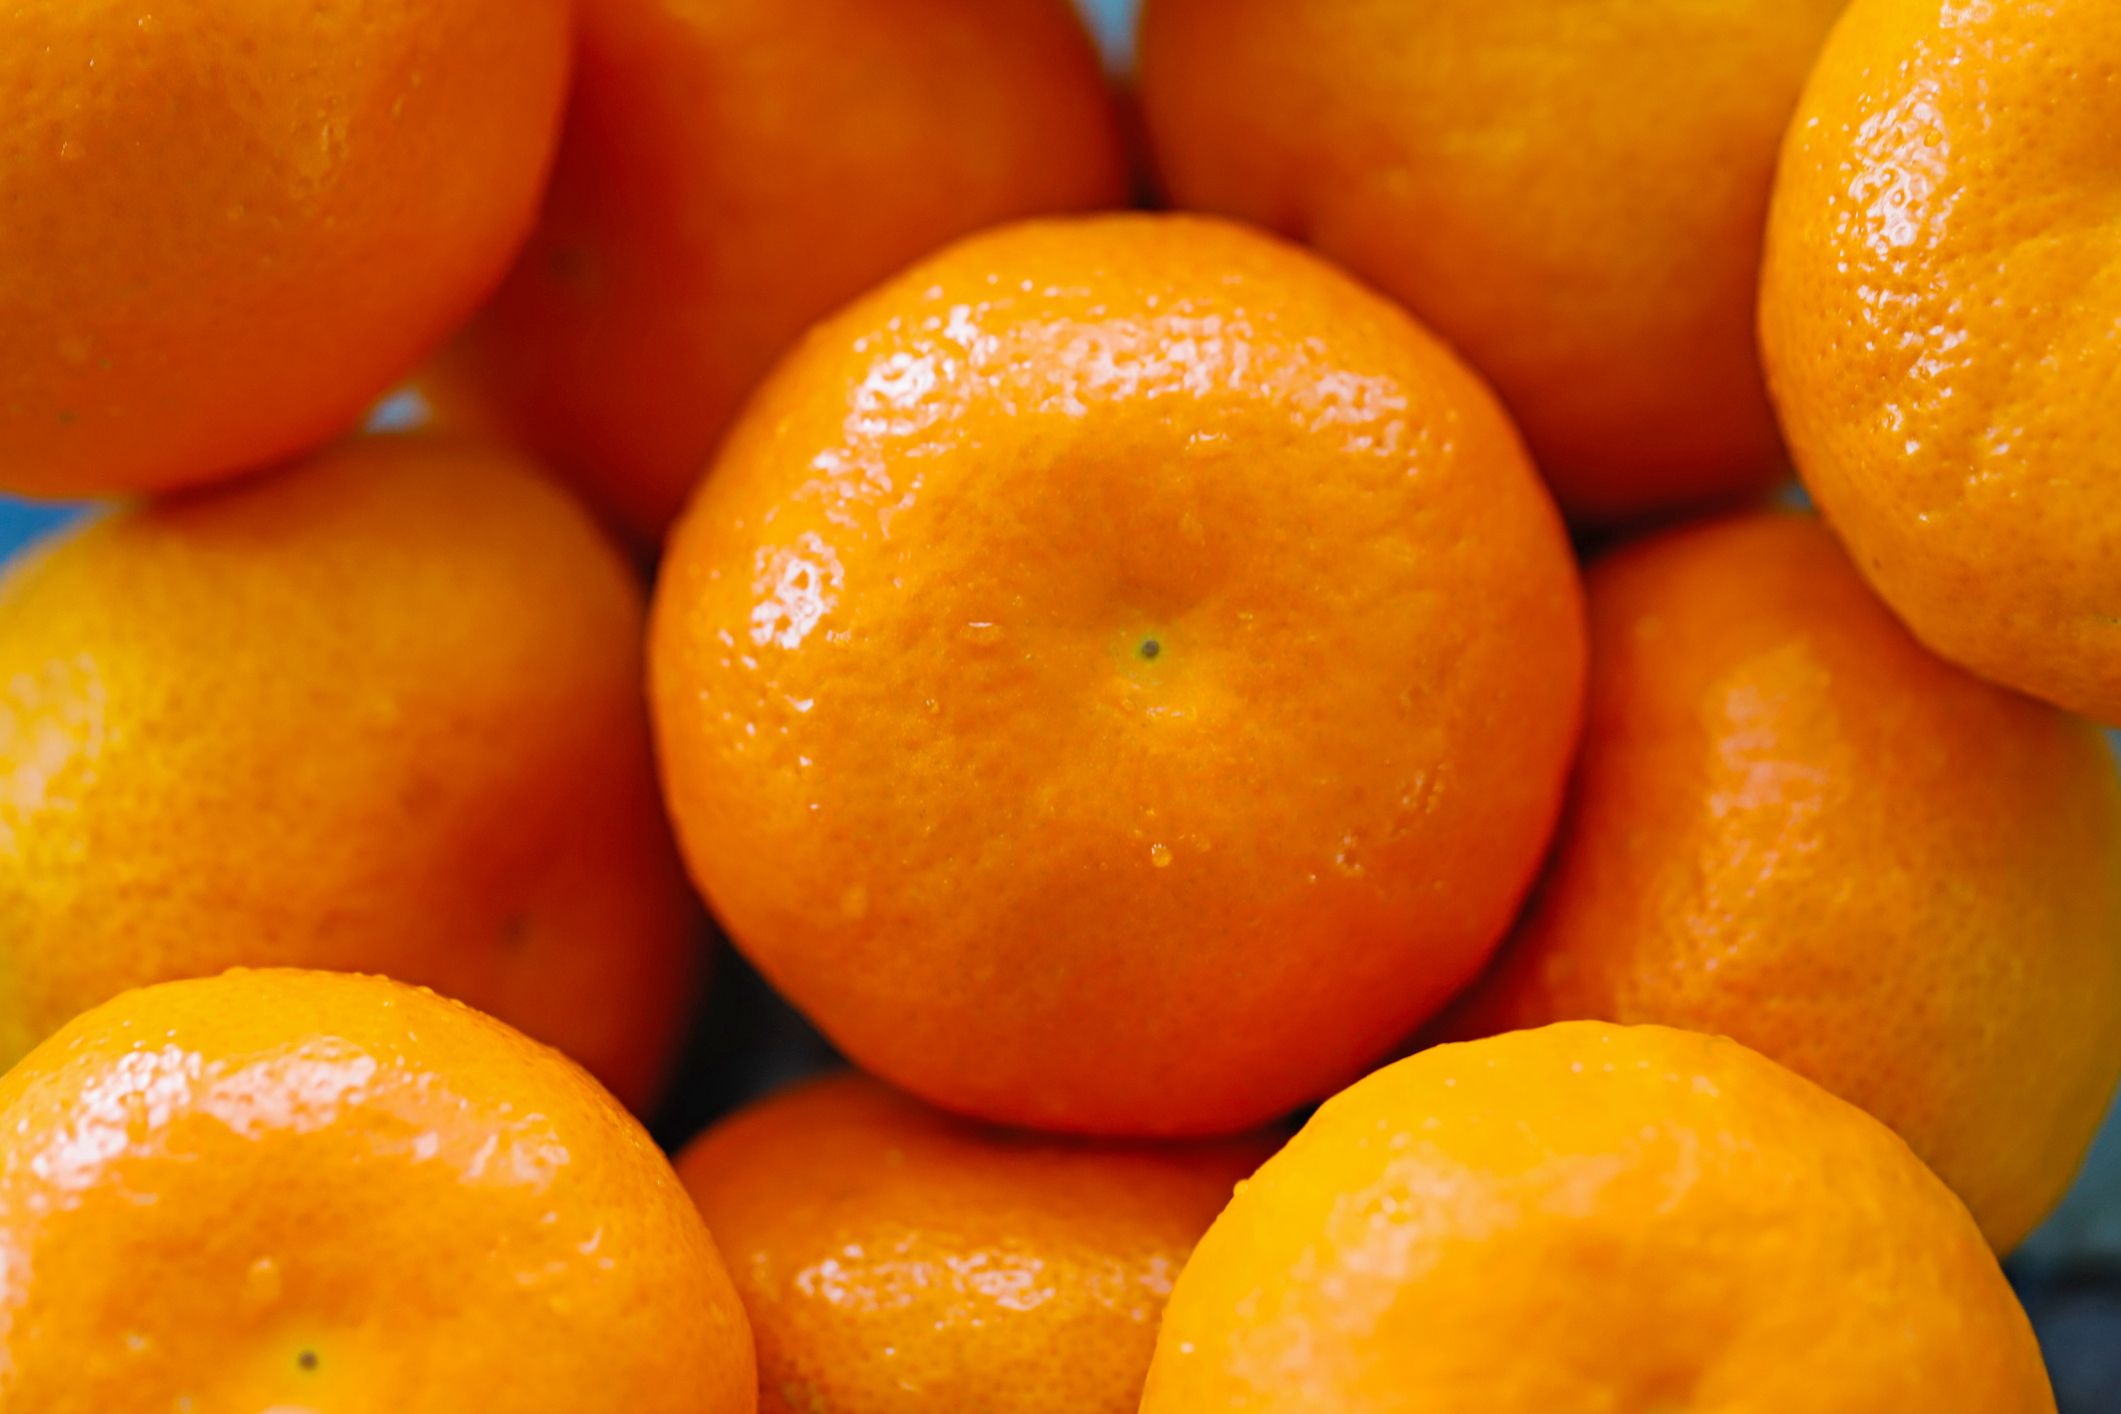 clementine vs mandarin